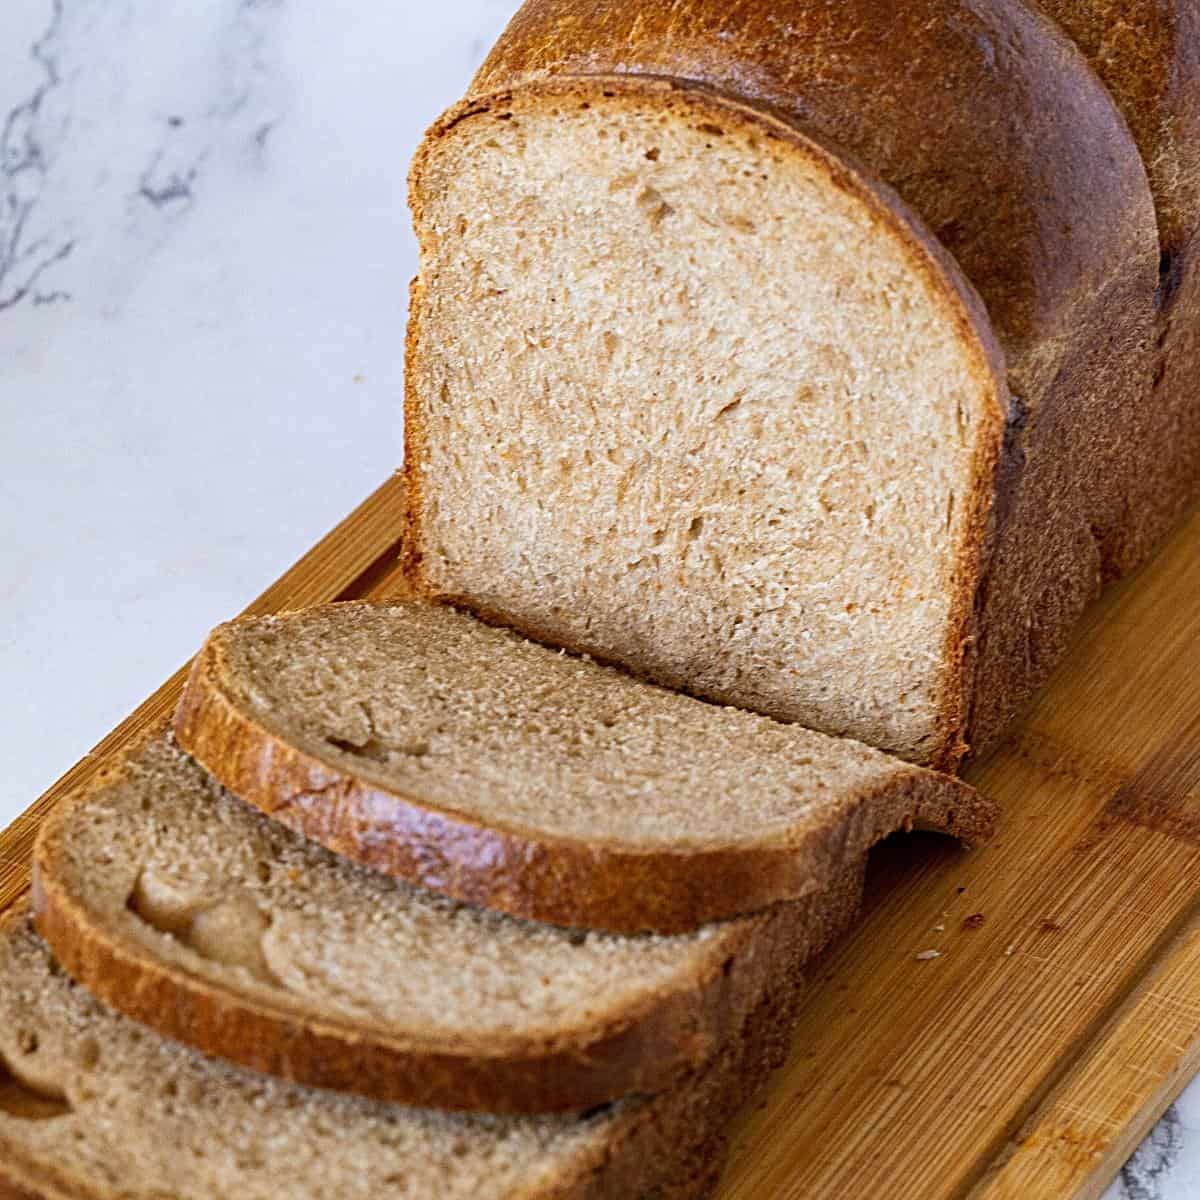 A sliced sandwich bread on the table.